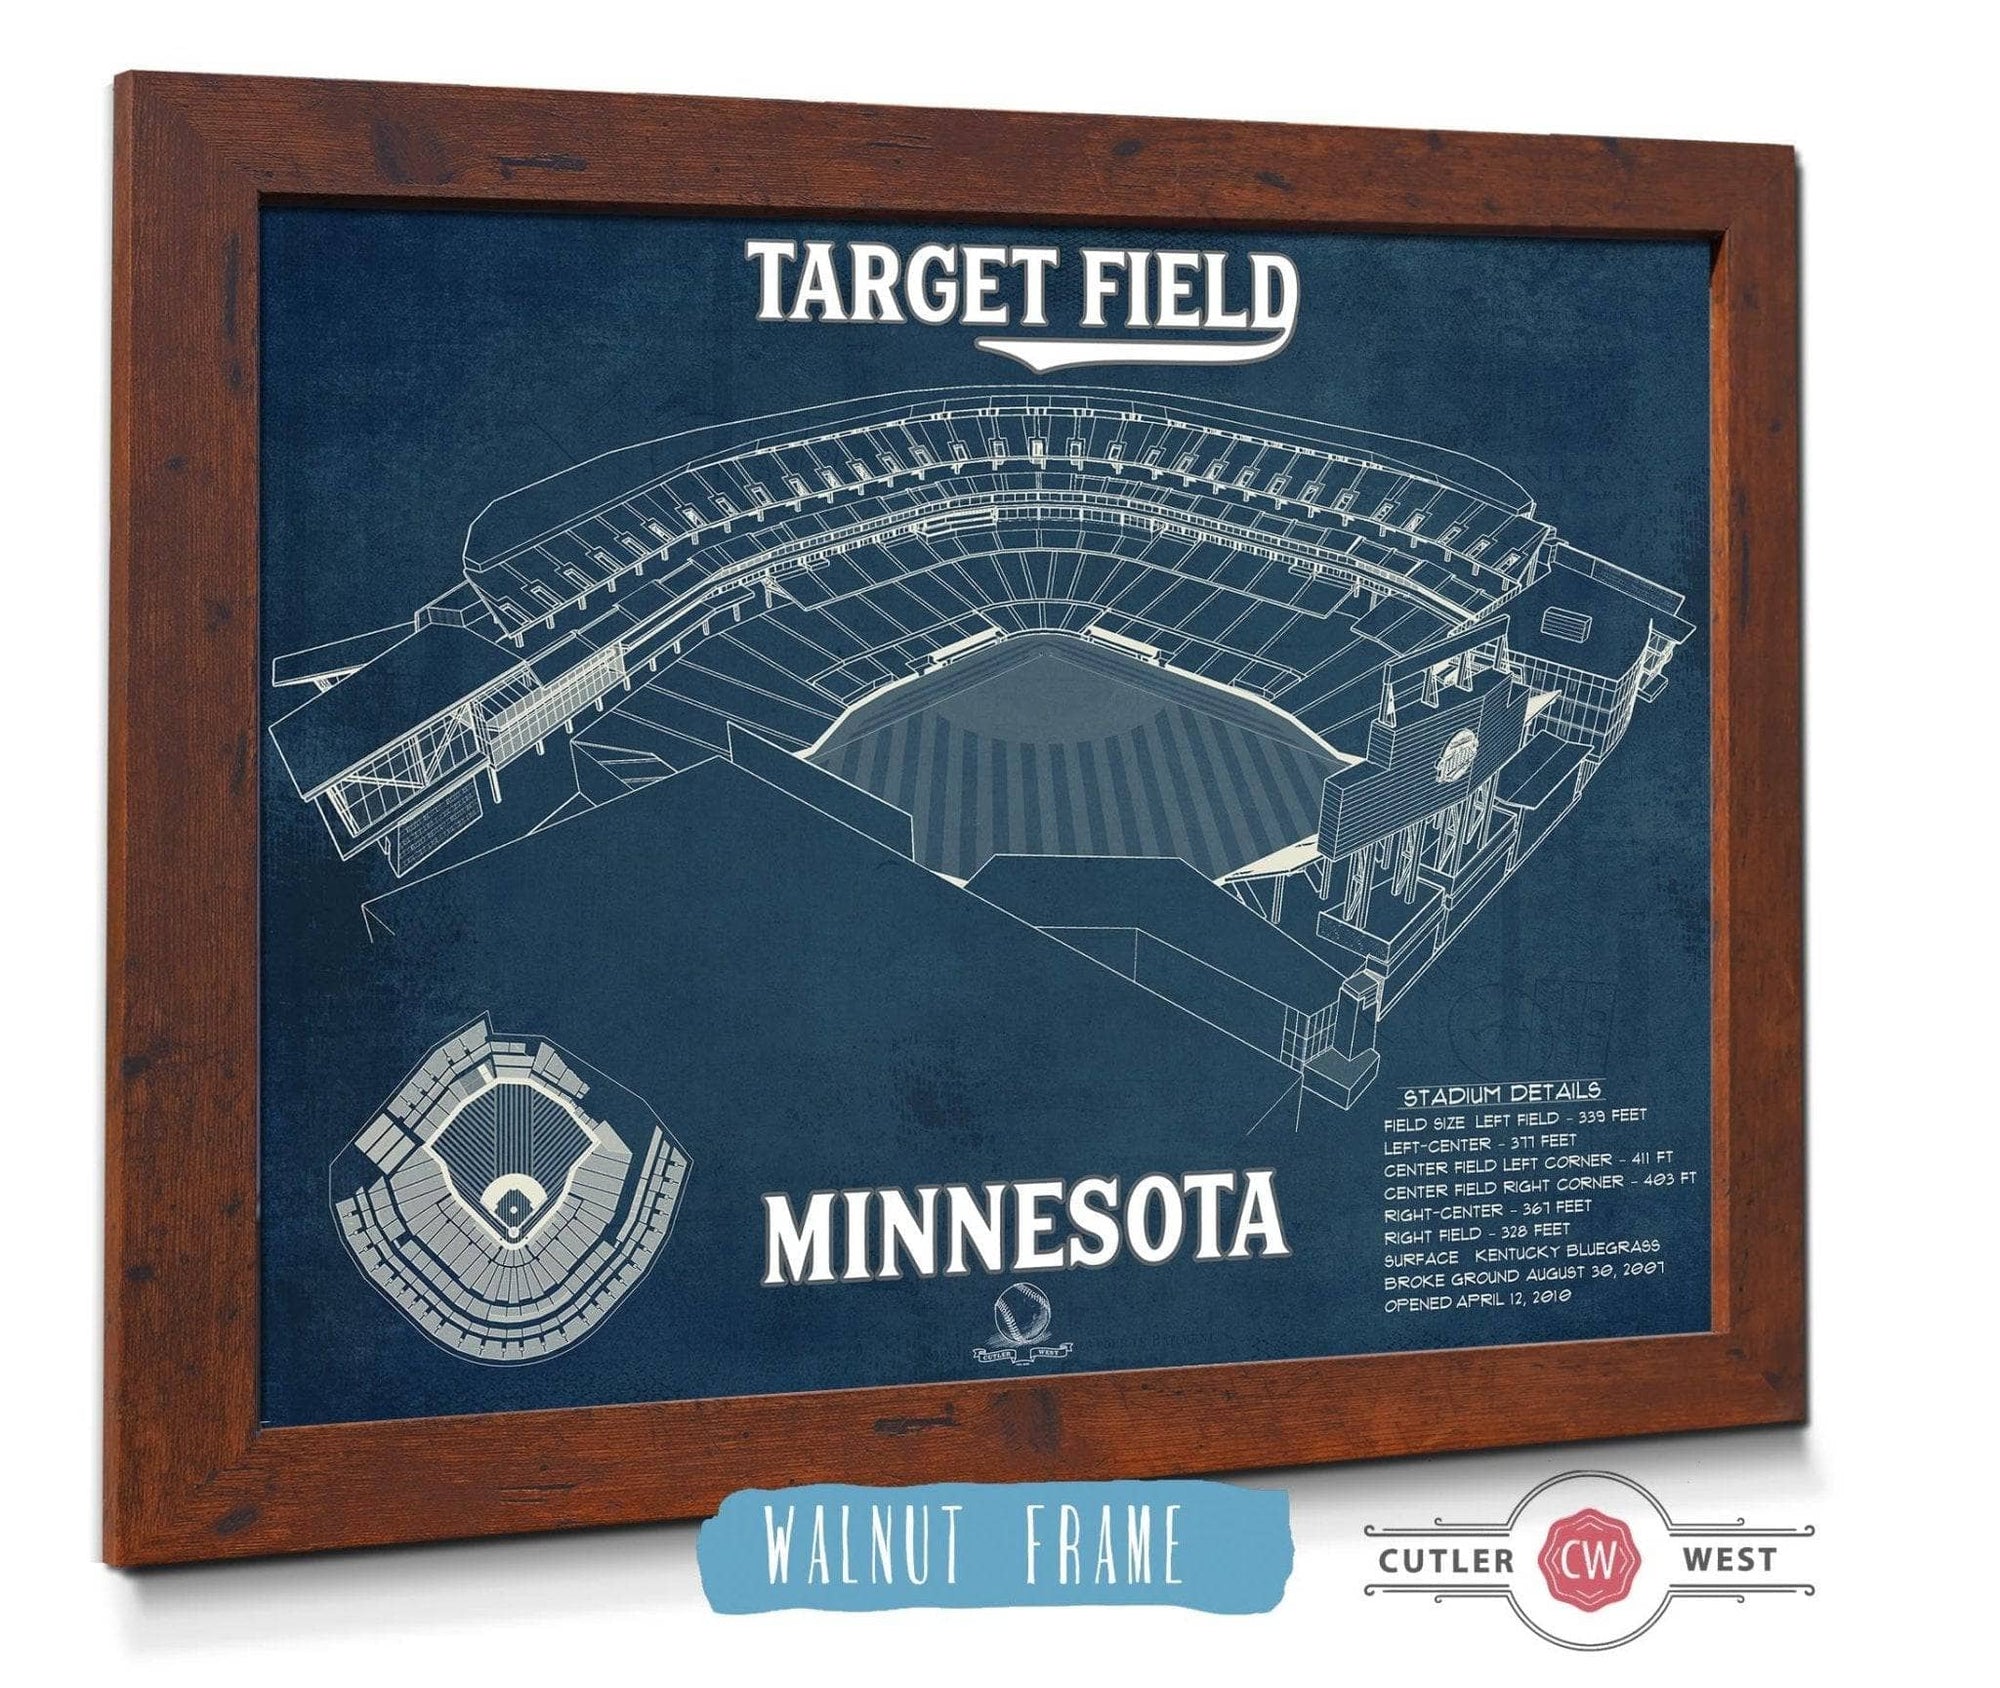 Cutler West Baseball Collection 14" x 11" / Walnut Frame Vintage Minnesota Twins - Target Field Baseball Print 694510511-14"-x-11"19717